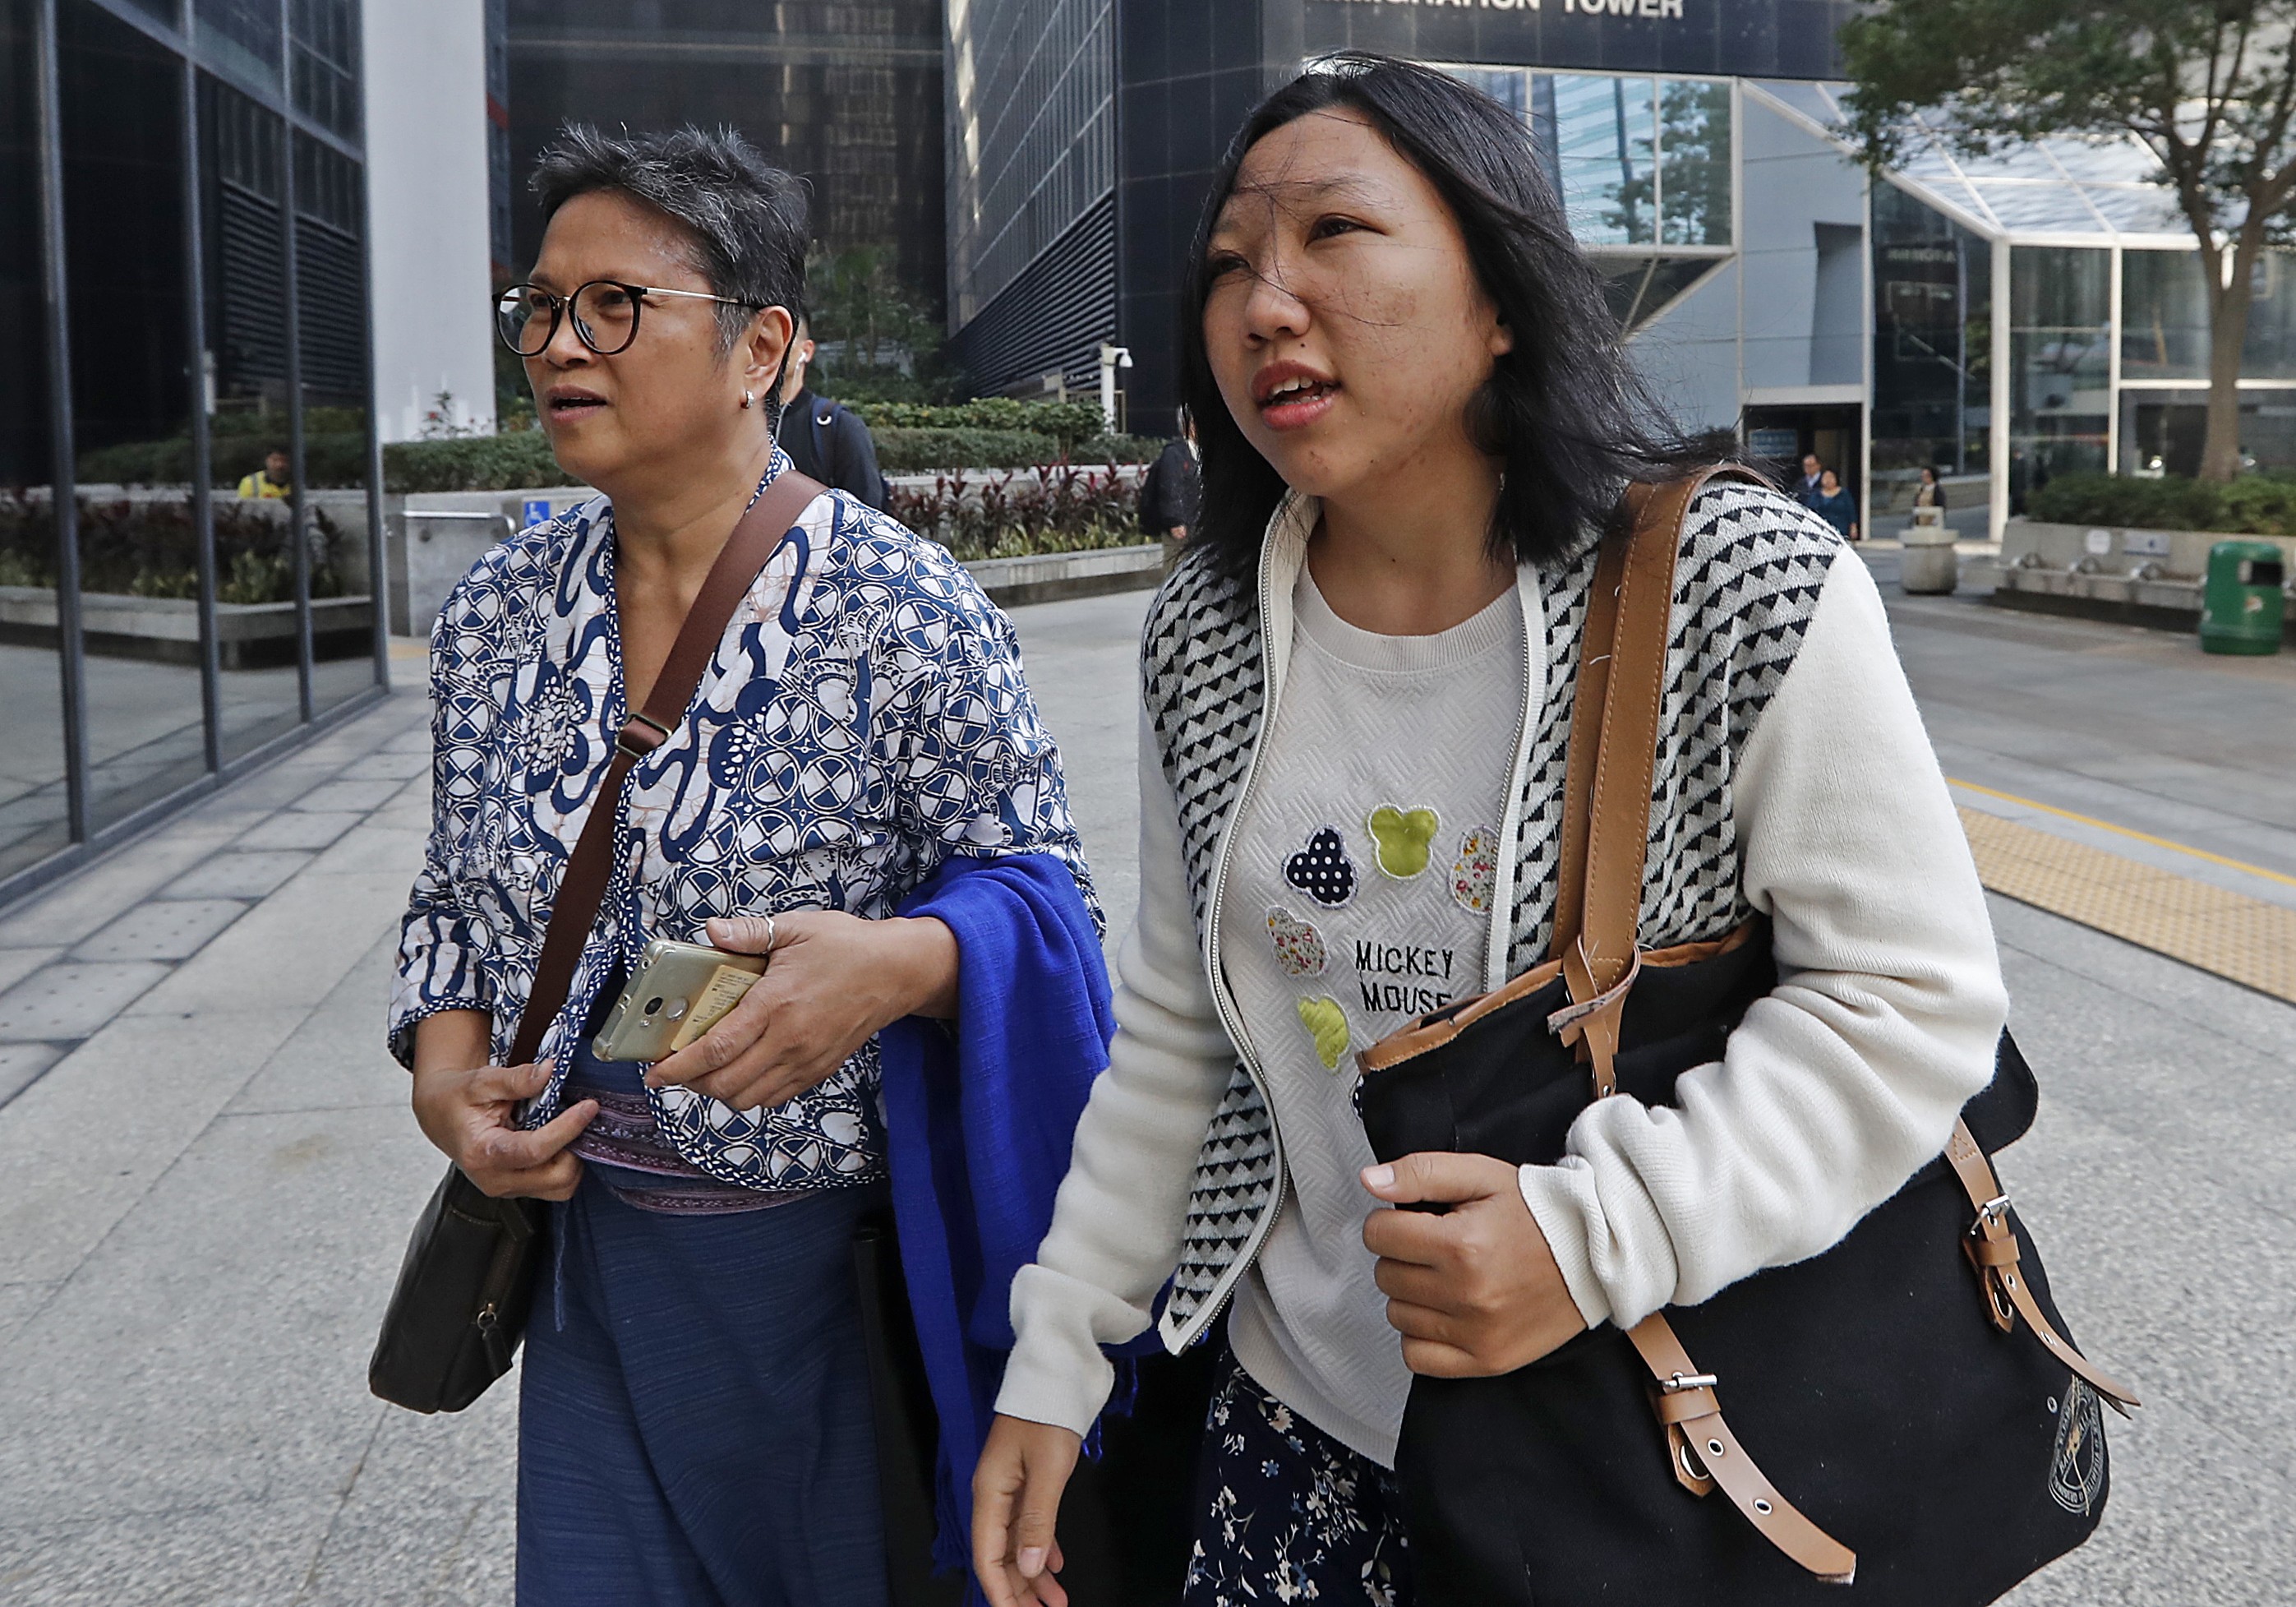 Erwiana Sulistyaningsih (right) arrives at court on Monday. Photo: Edward Wong